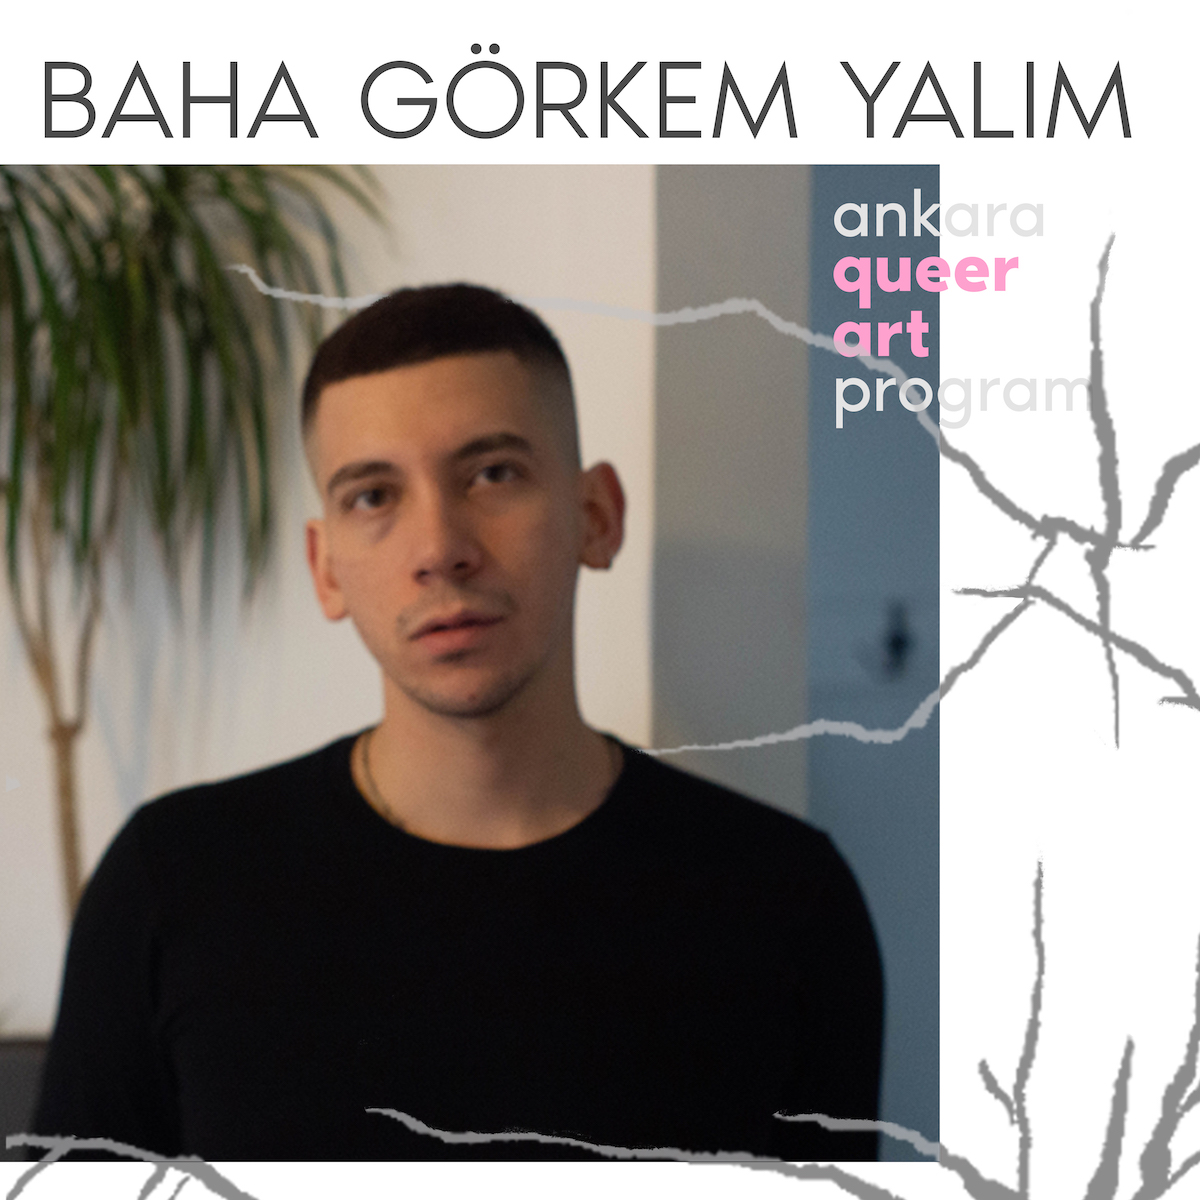 Meet Baha Görkem Yalım | Kaos GL - News Portal for LGBTI+